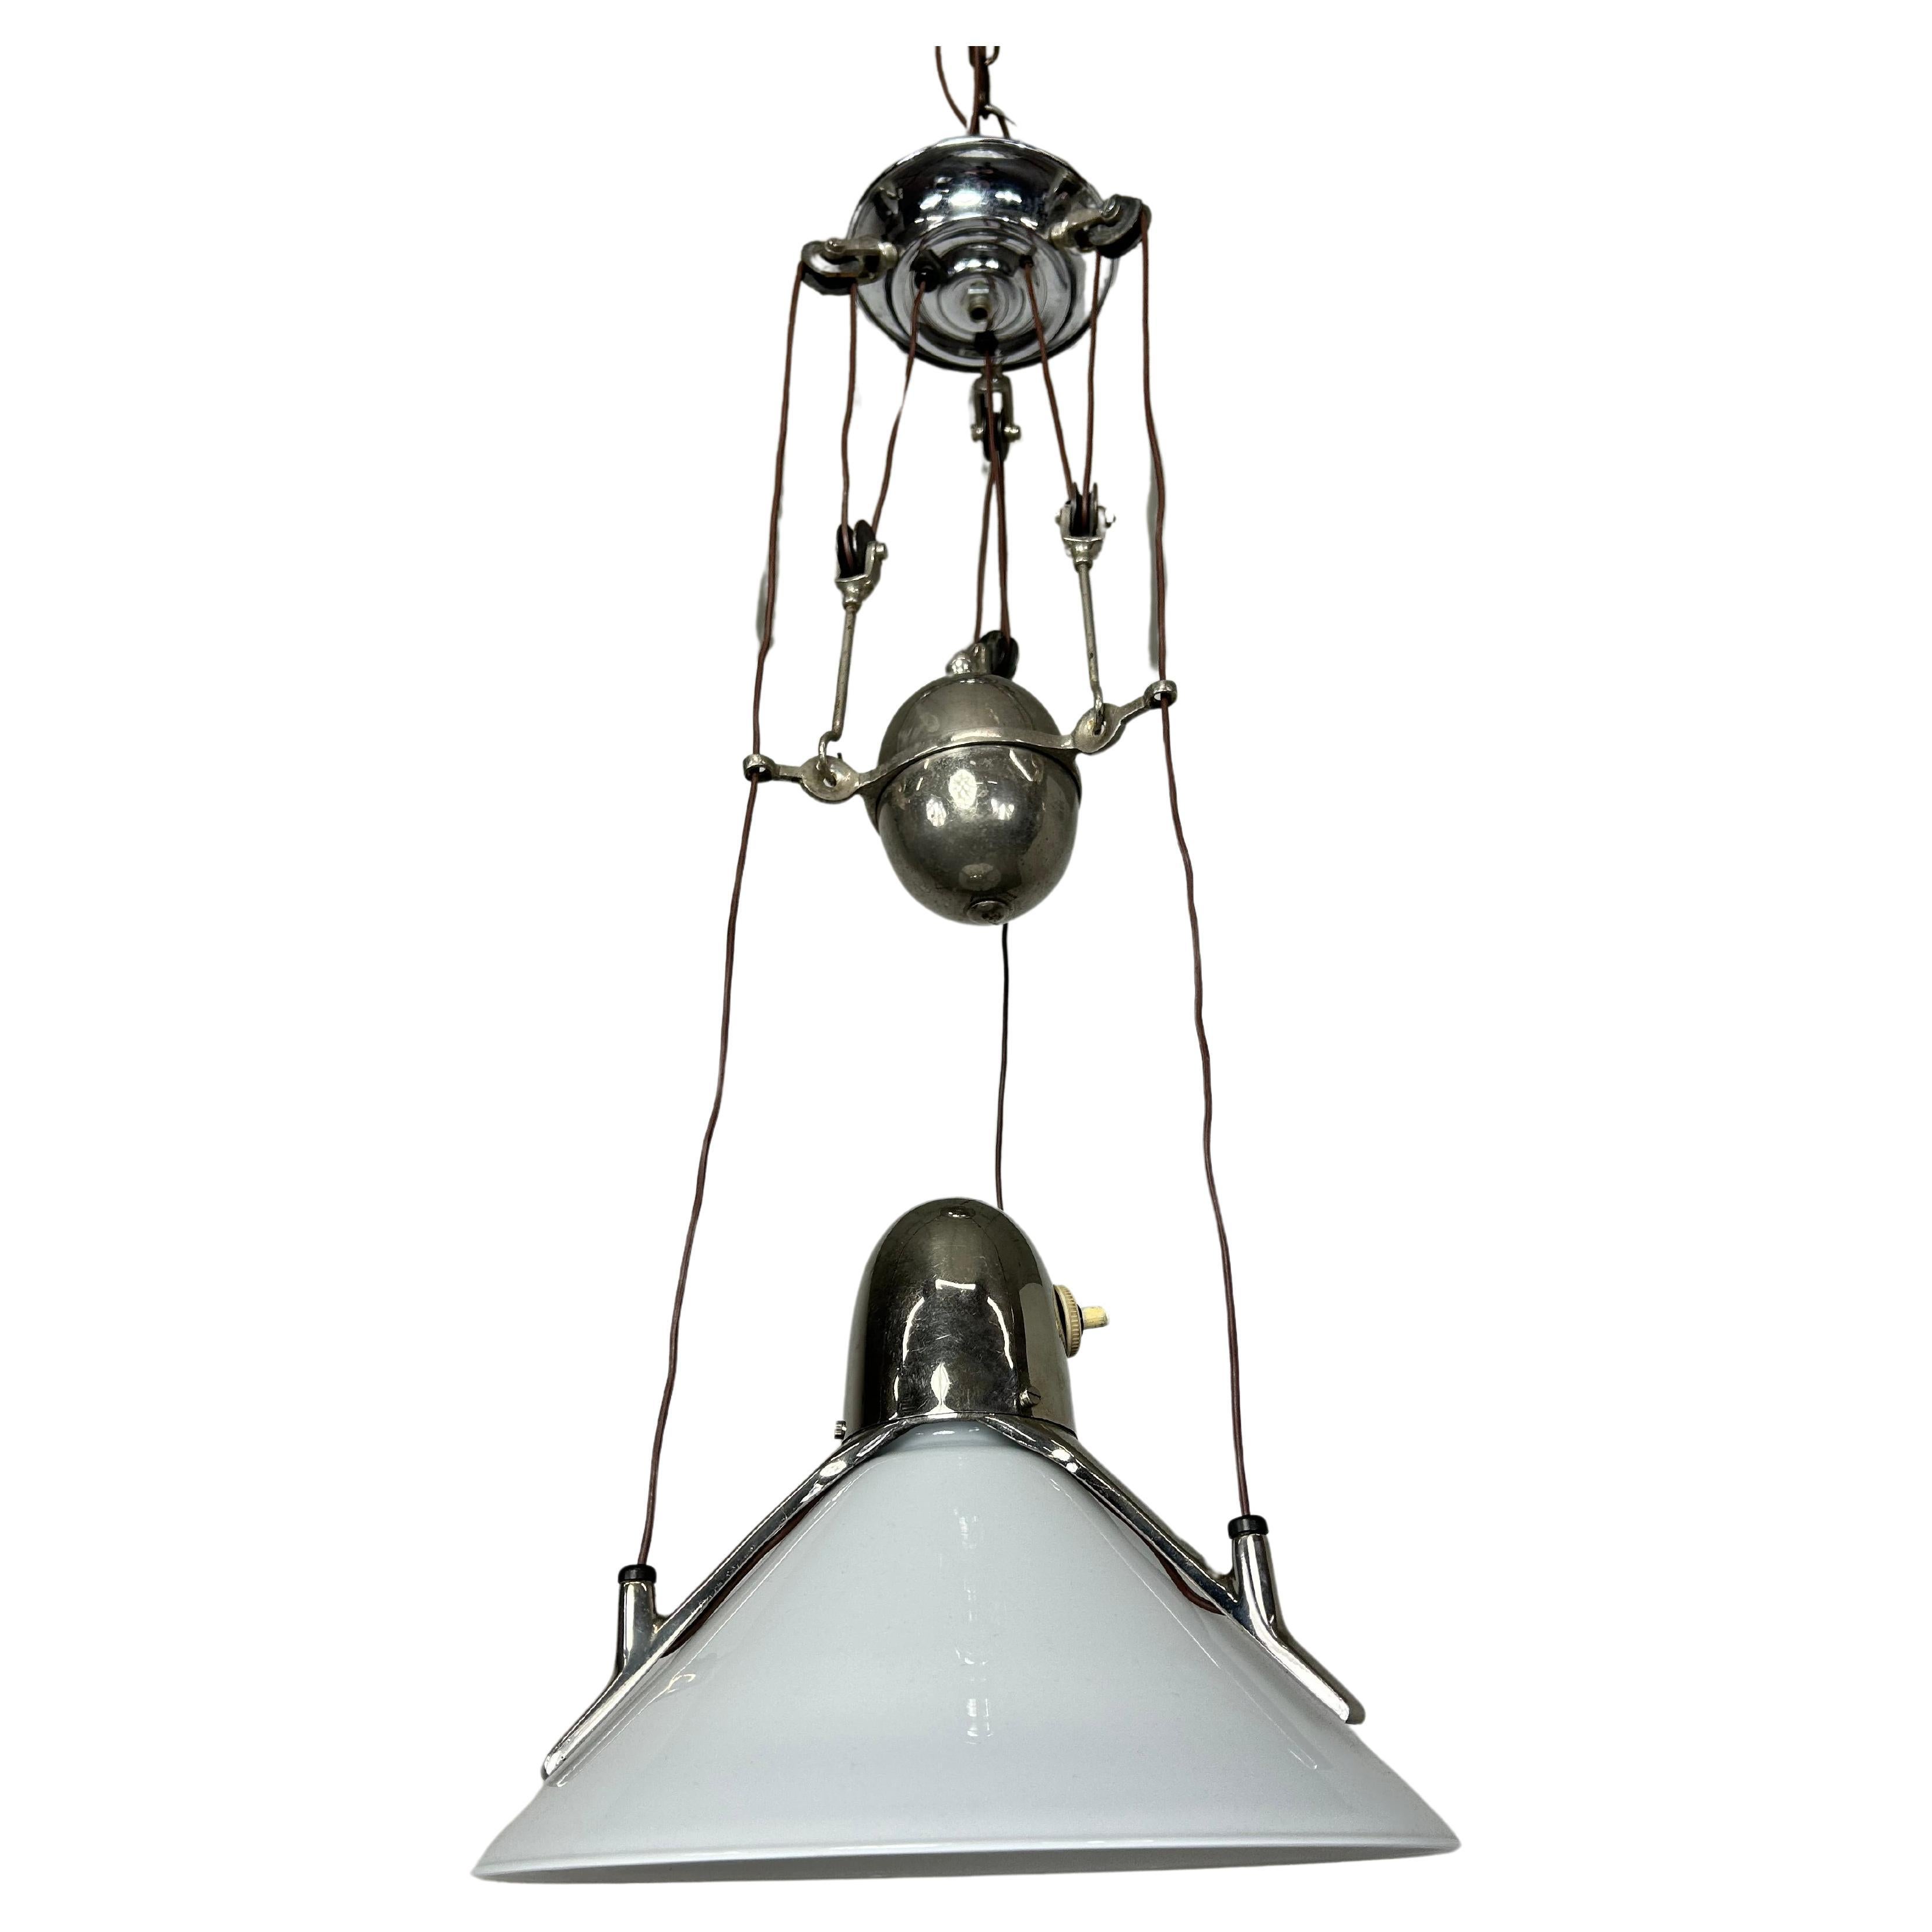 Art deco adjustable hanging lamp For Sale